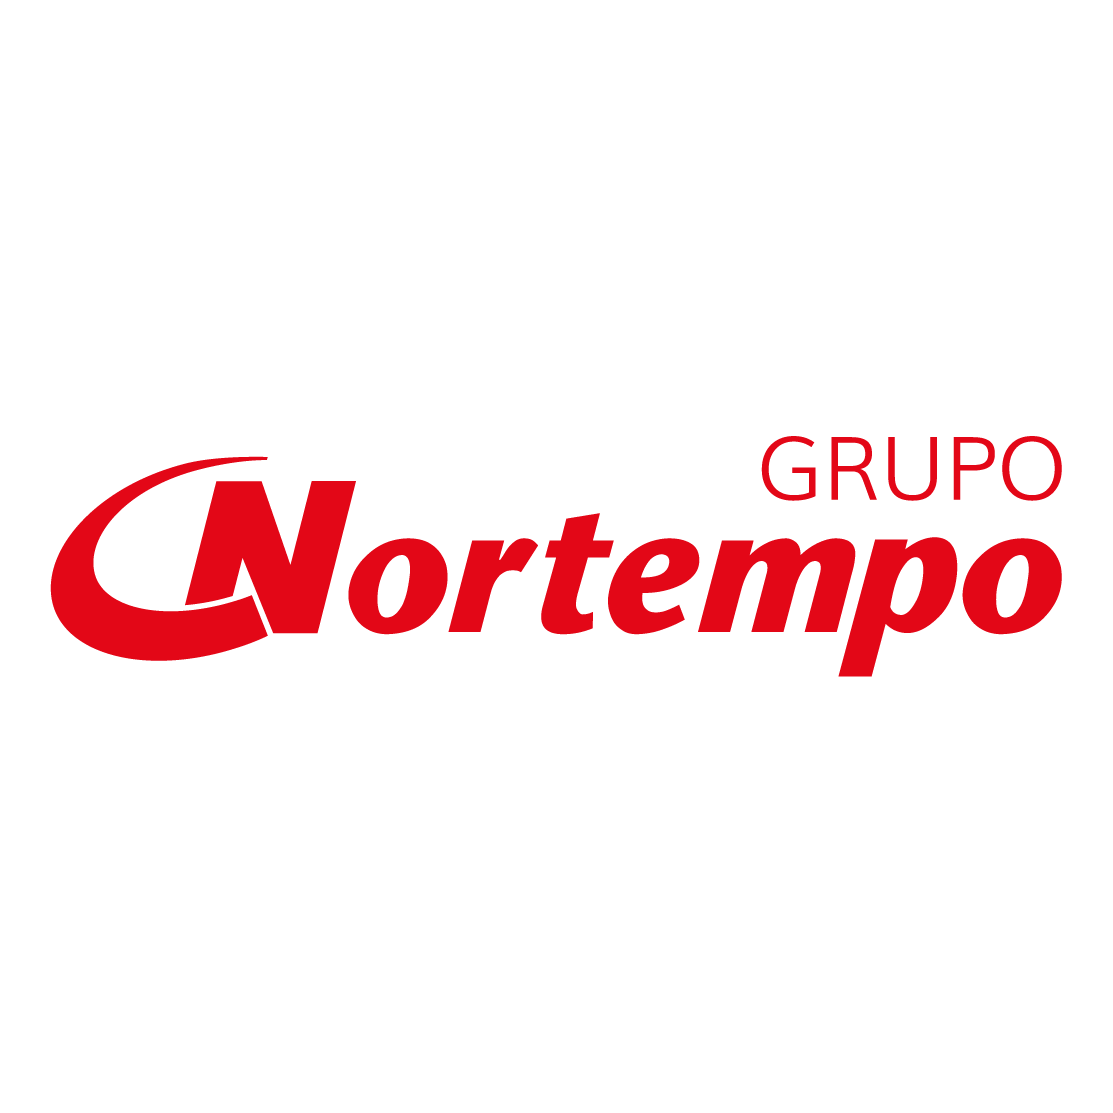 Nortempo